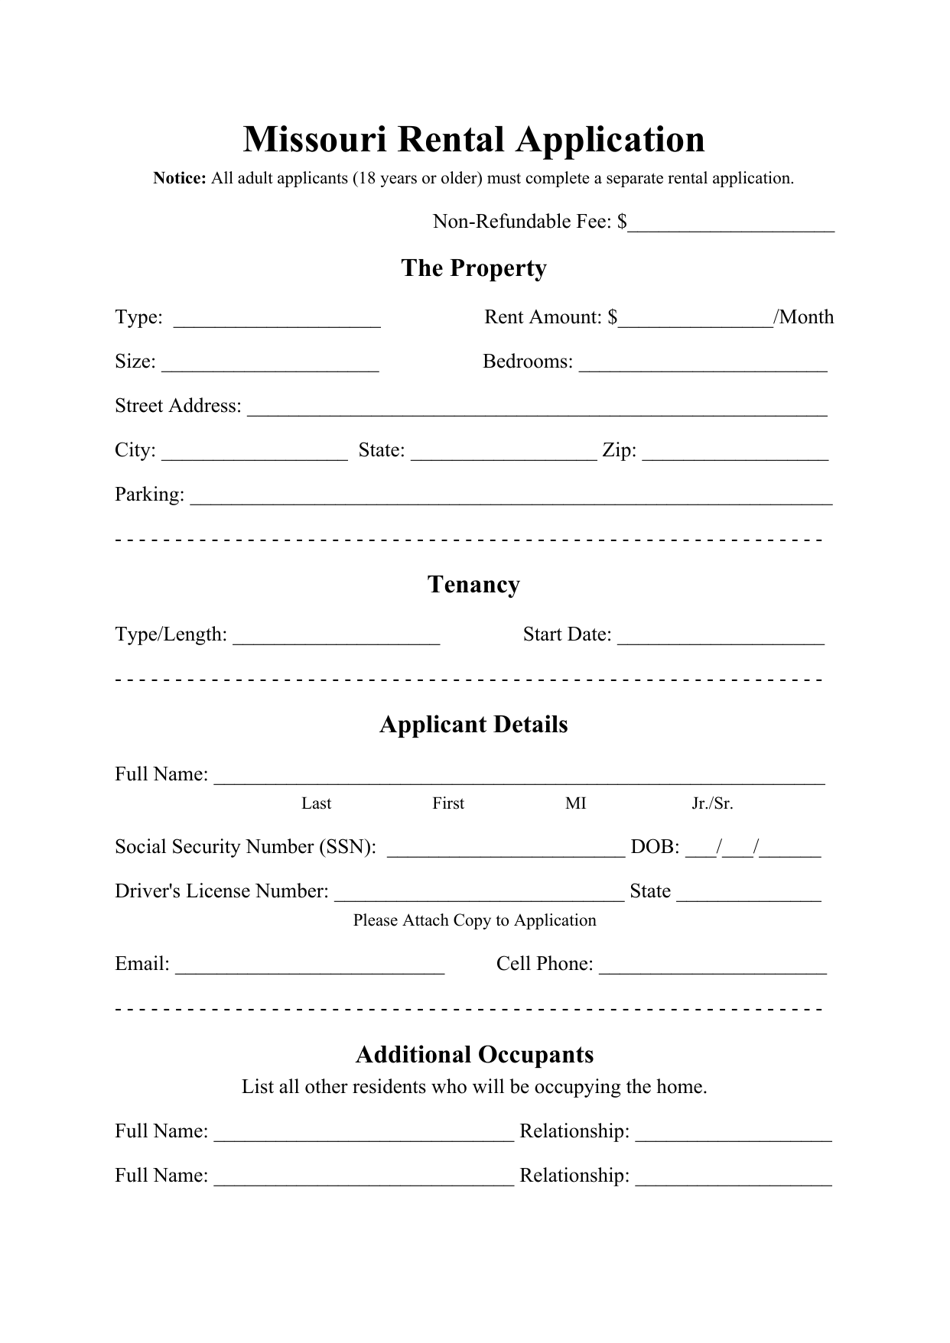 Rental Application Form - Missouri, Page 1